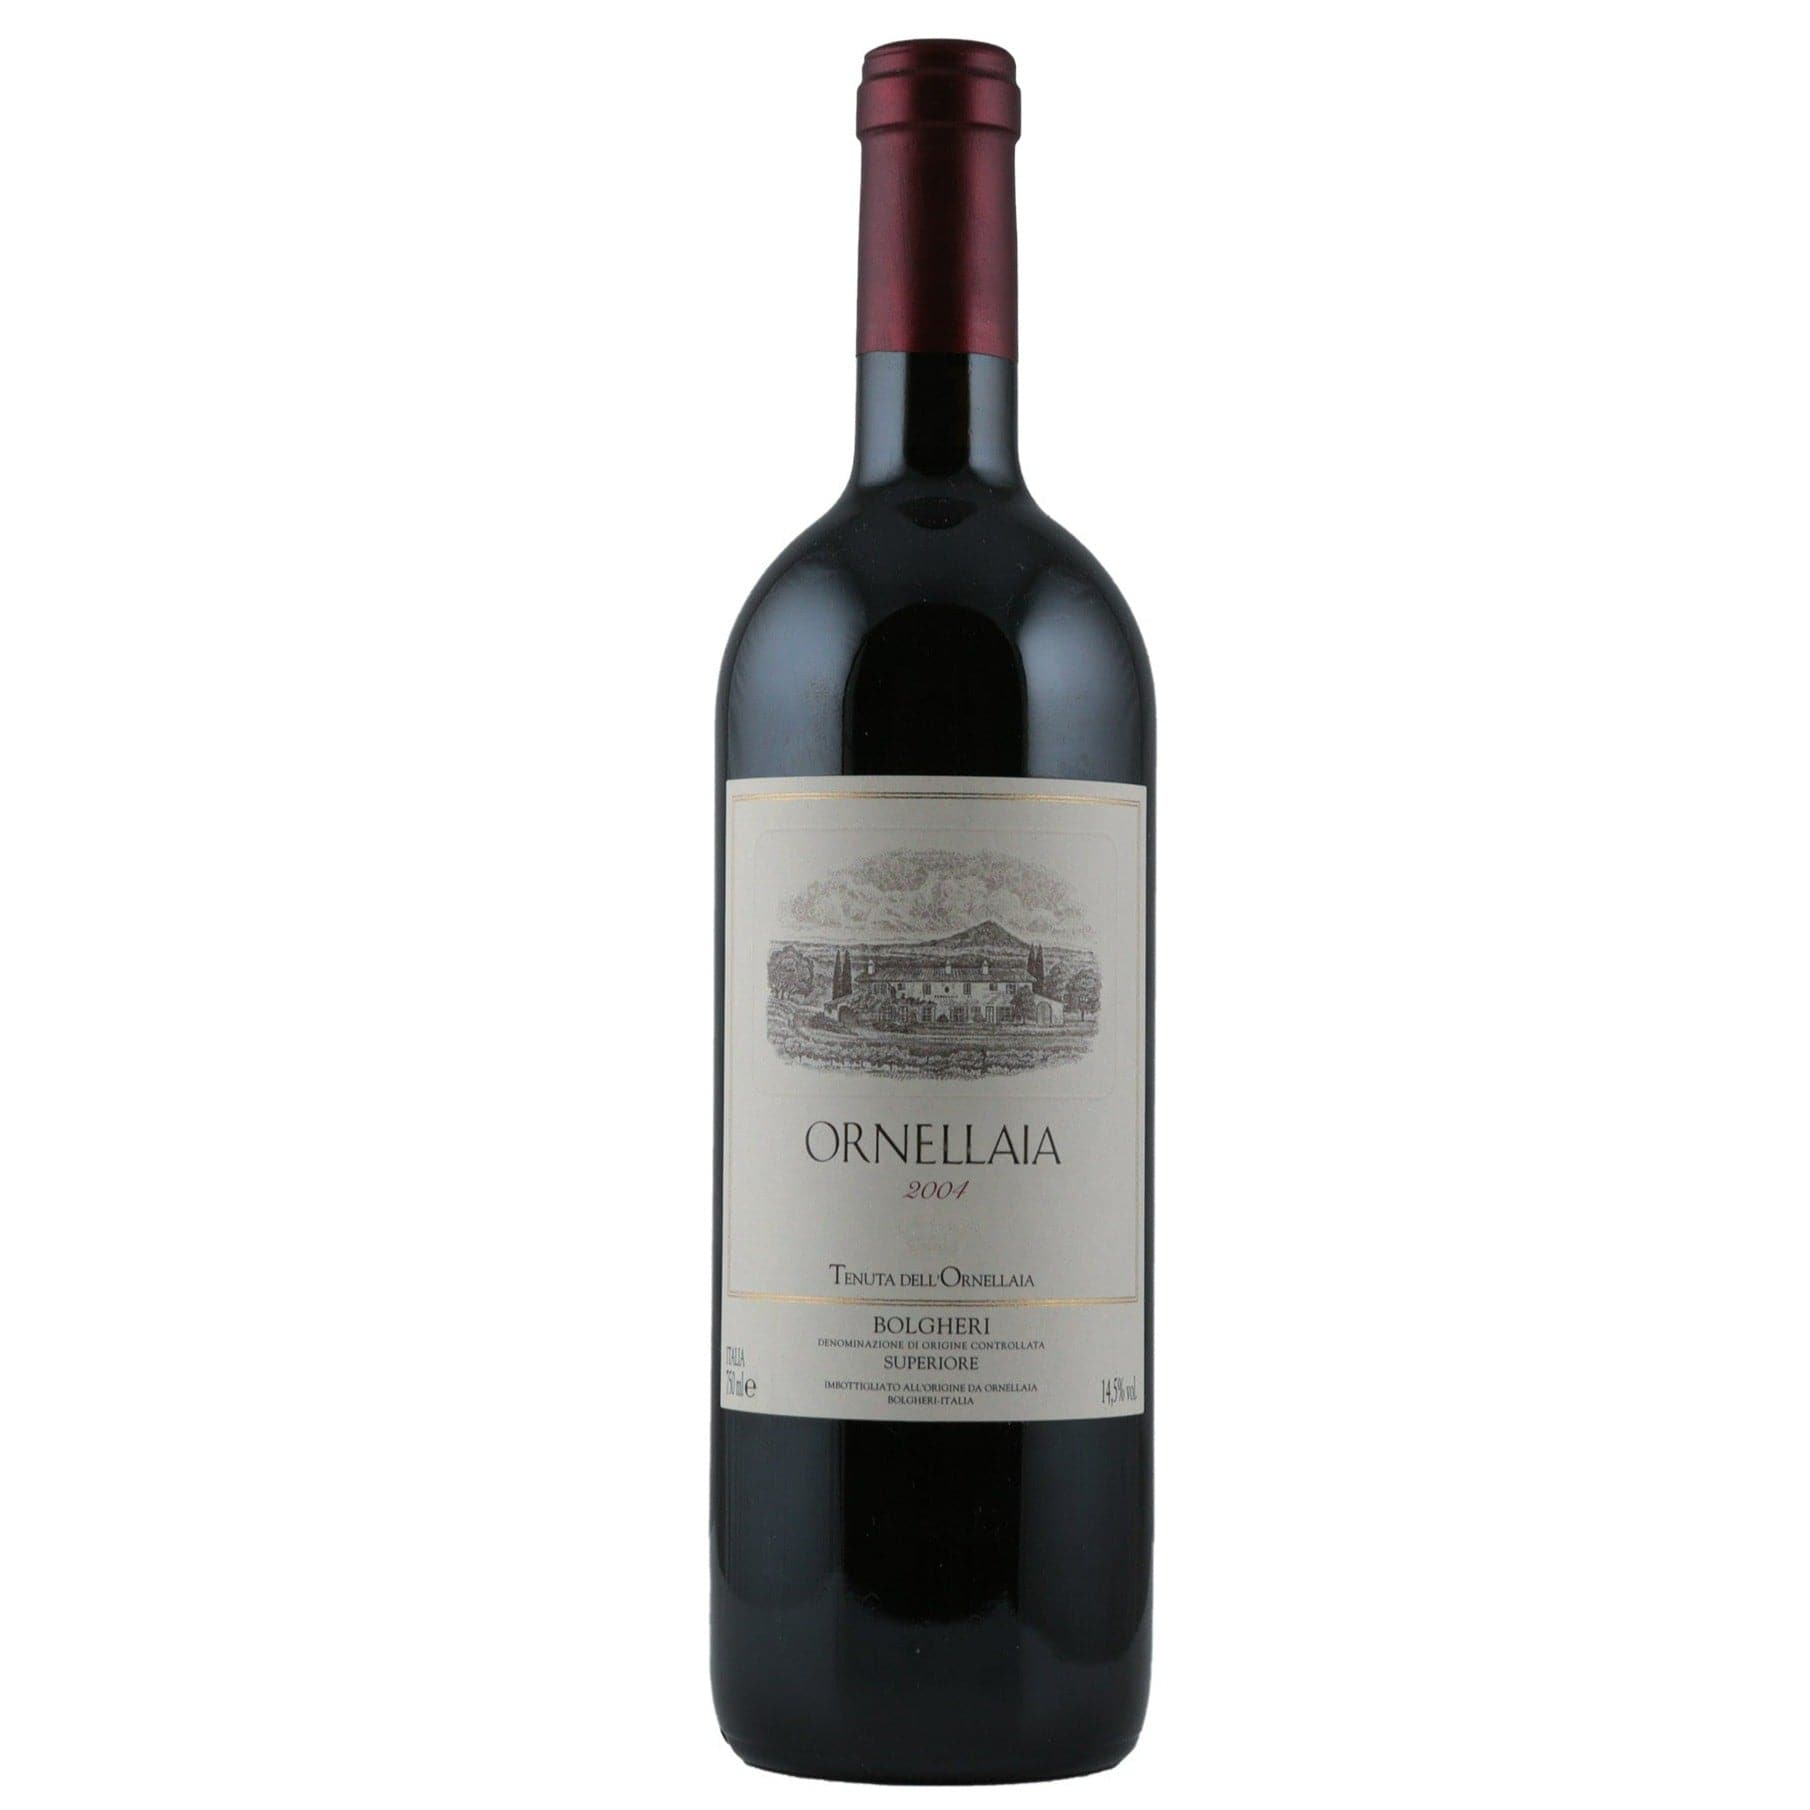 Single bottle of Red wine Ornellaia, Bolgheri Superiore, Bolgheri, 2004 60% Cabernet Sauvignon, 25% Merlot, 12% Cabernet Franc & 3% Petit Verdot